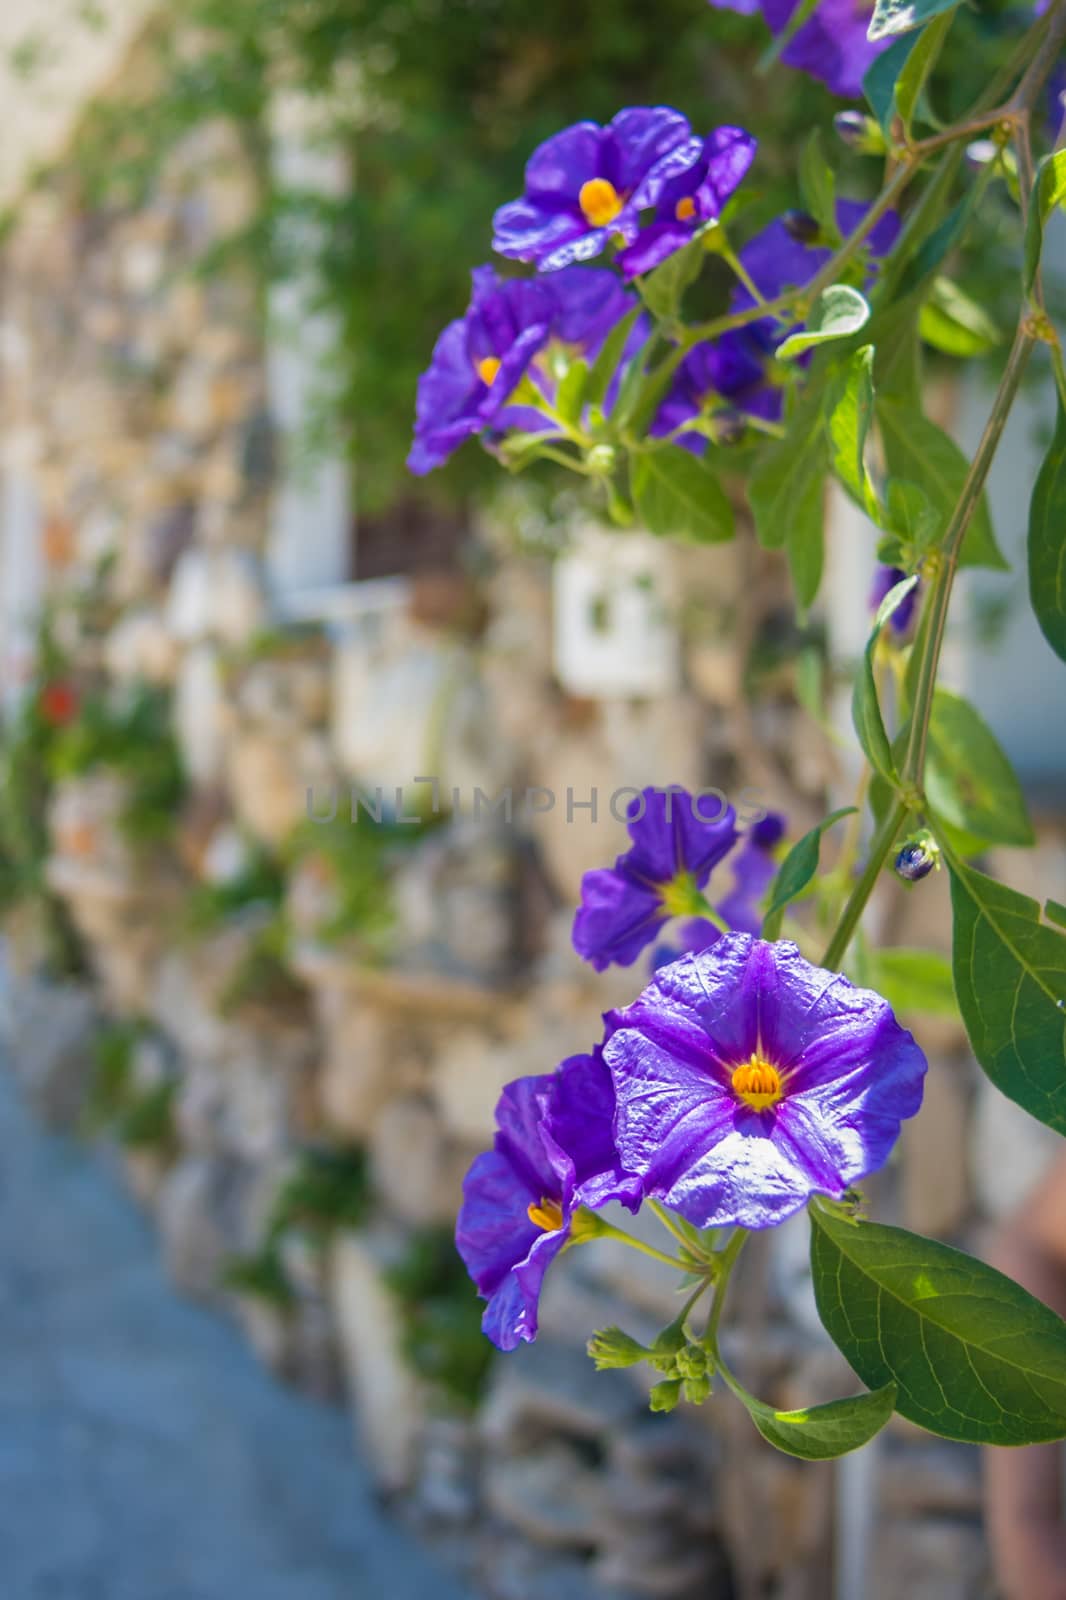 Violet Jasmine growing at a natural stone wall